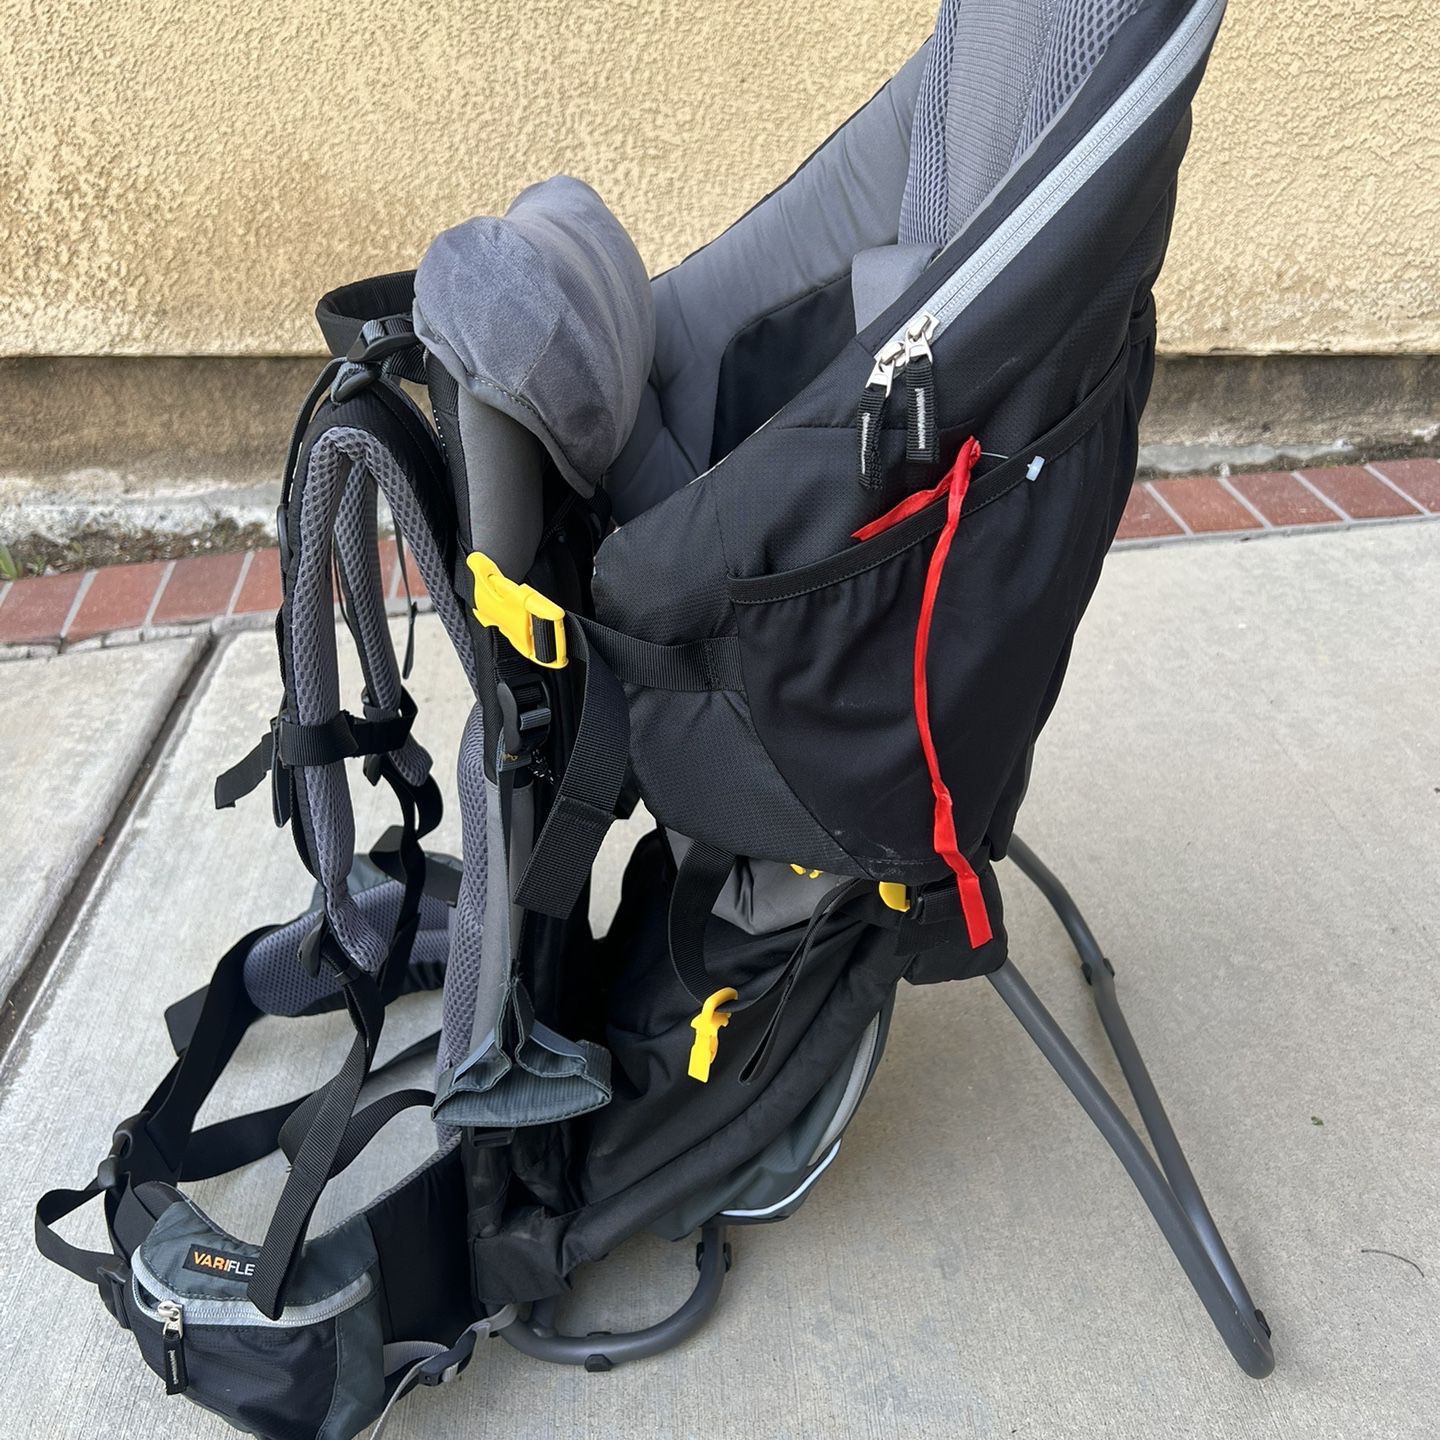 Deuter Kid Comfort 3 Child Carrier ($150)